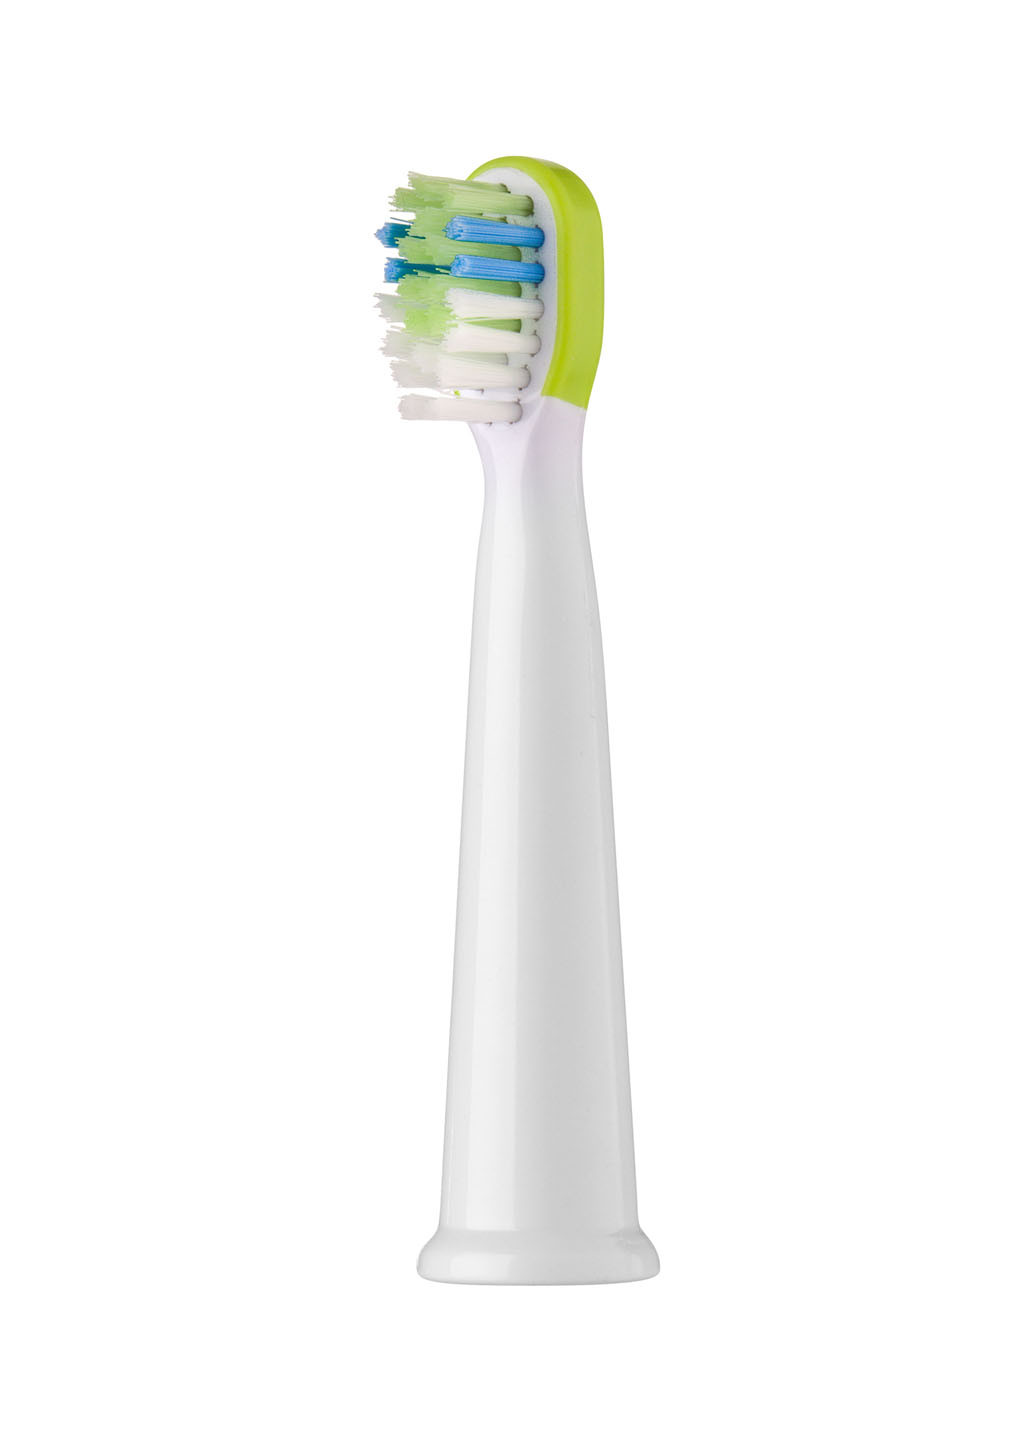 Електрична зубна щітка дитяча Sencor soc0912gr (149310411)